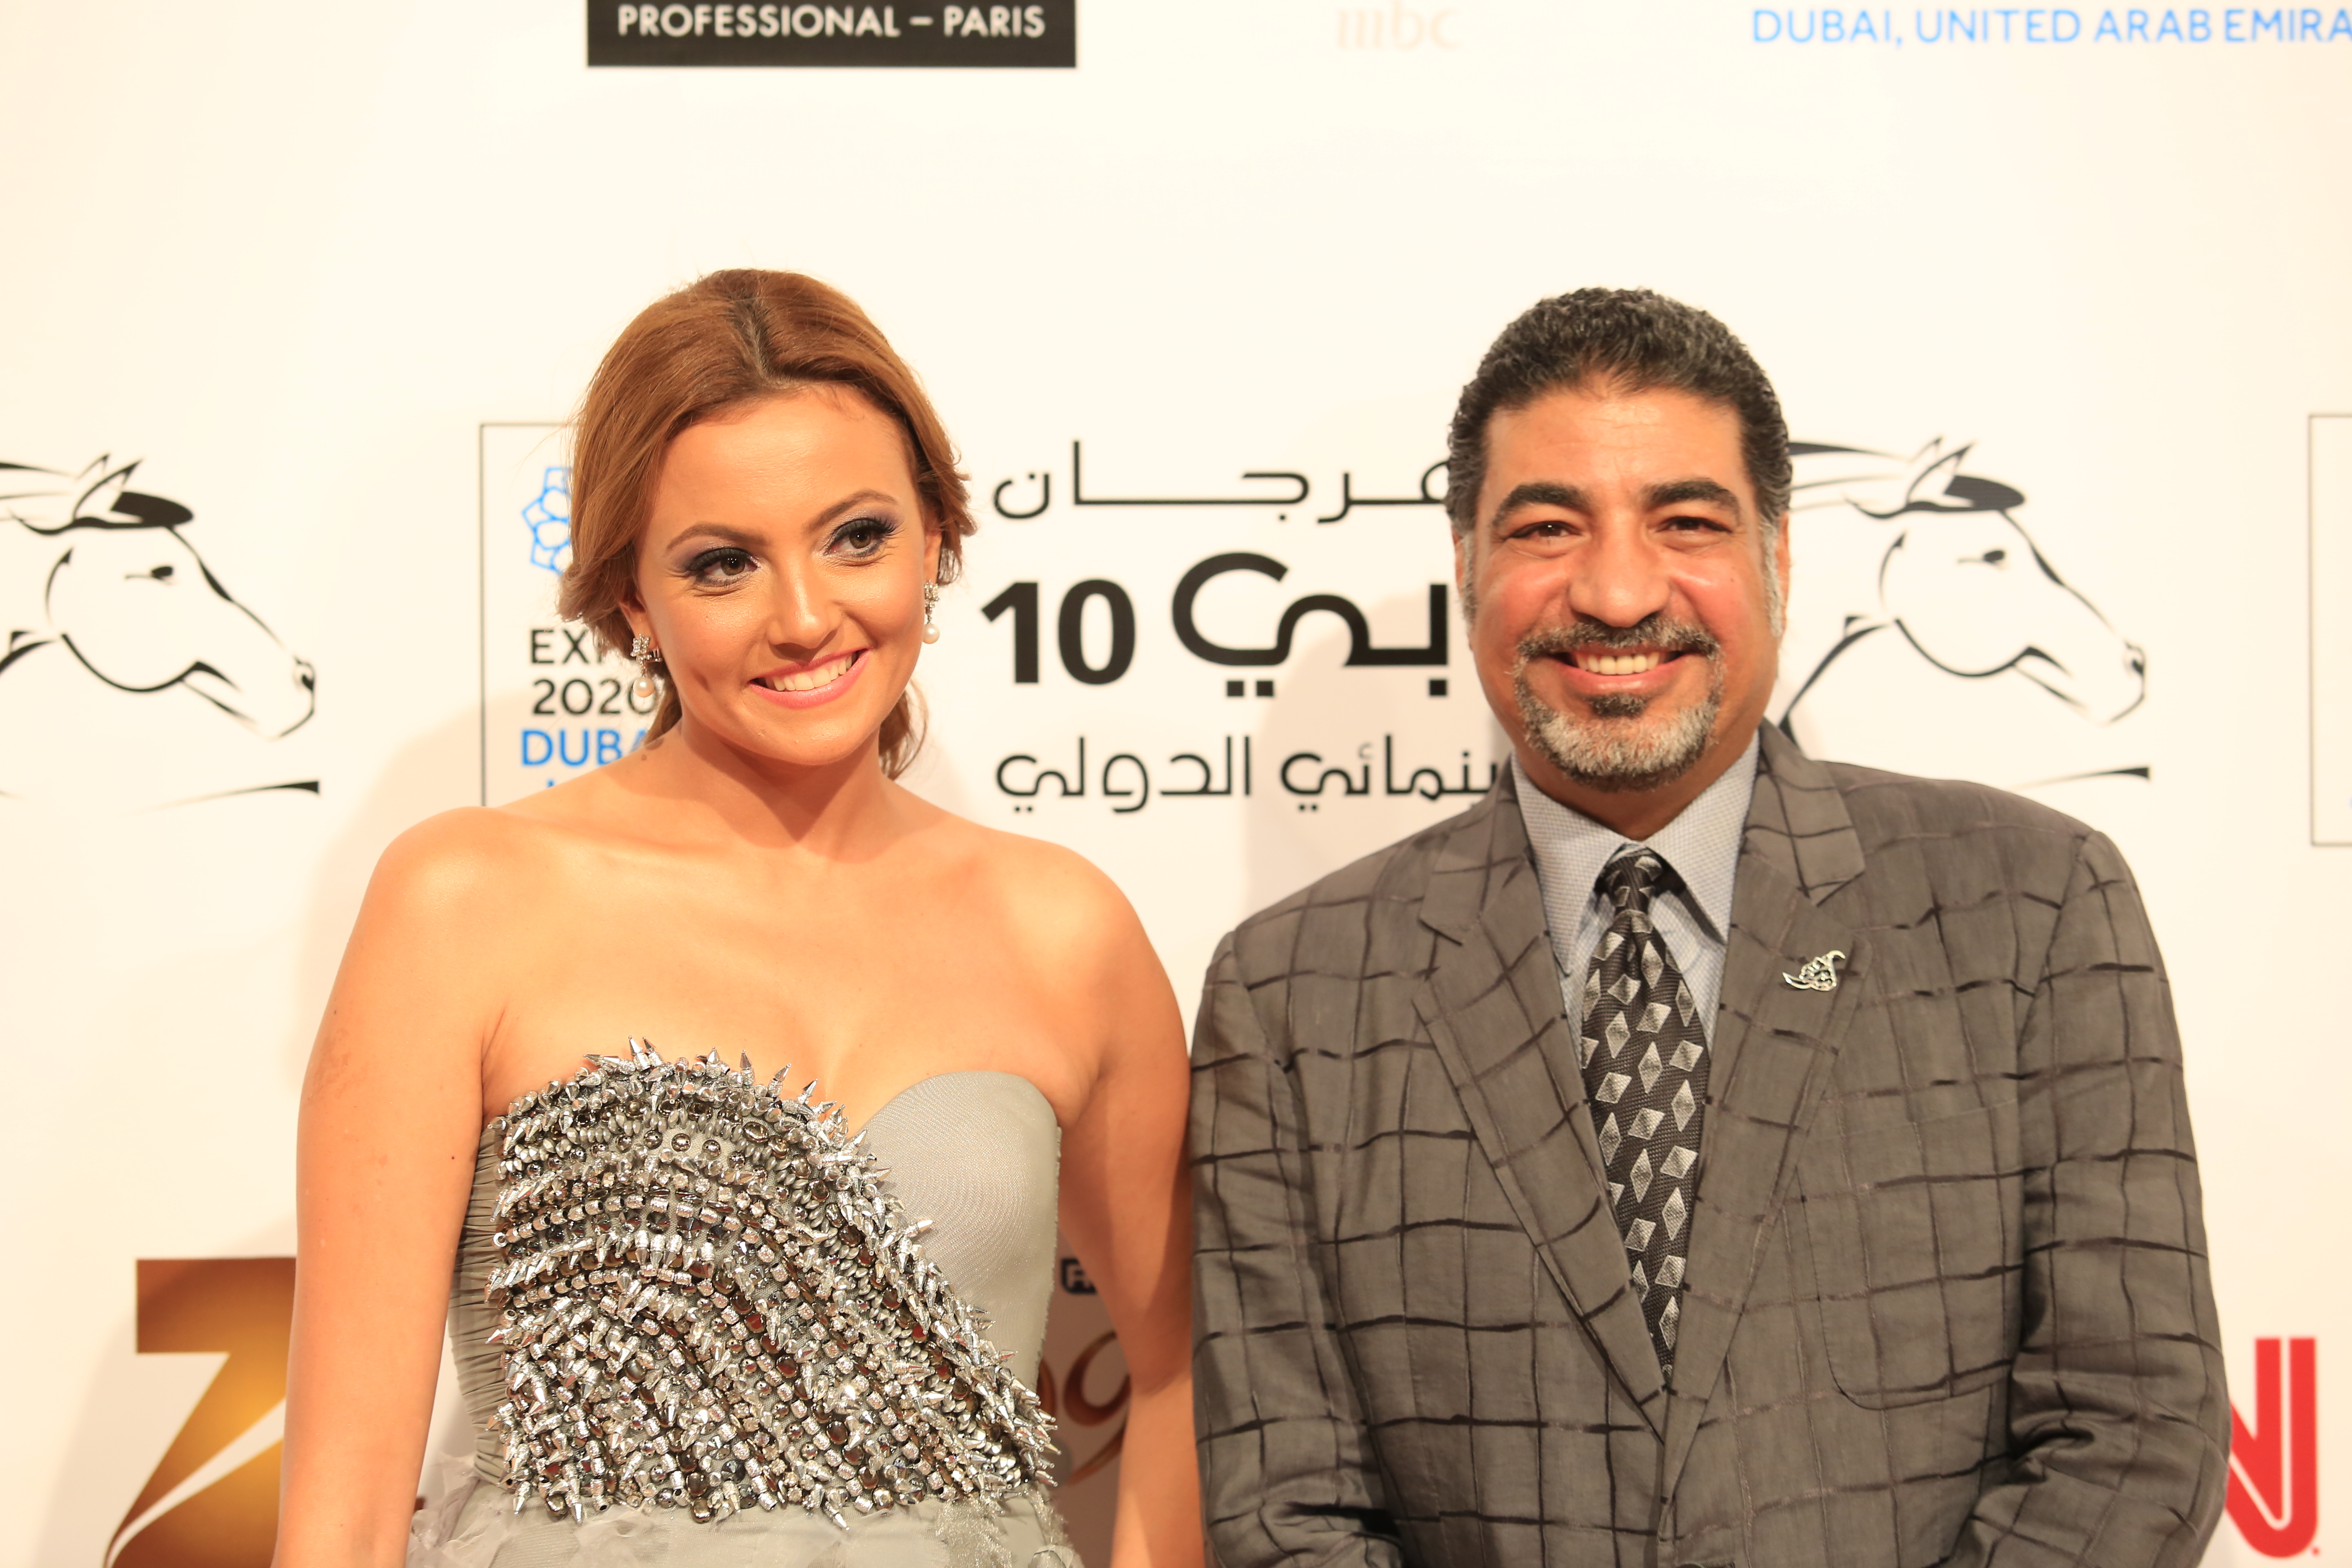 Sayed Badreya and Boshra at Dubai International Film Festival 2013